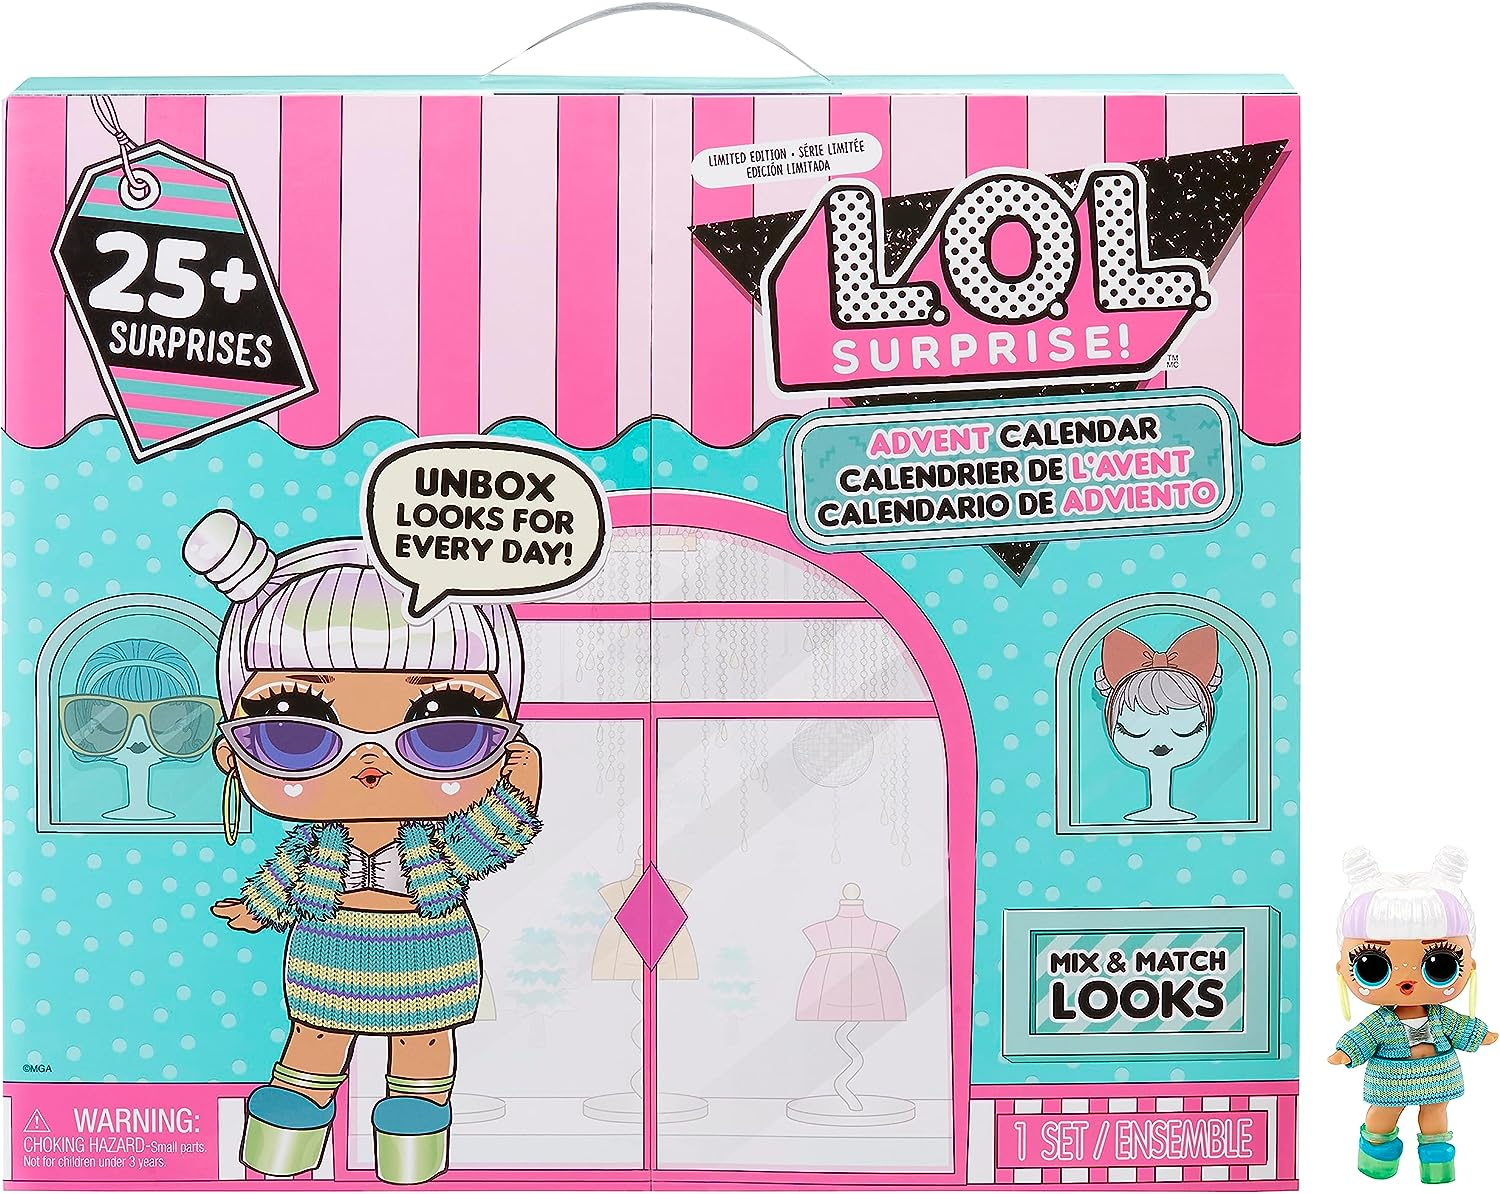 L.O.L. Surprise OH MEU DEUS. Boneca da moda - VICTORY - Inclui boneca